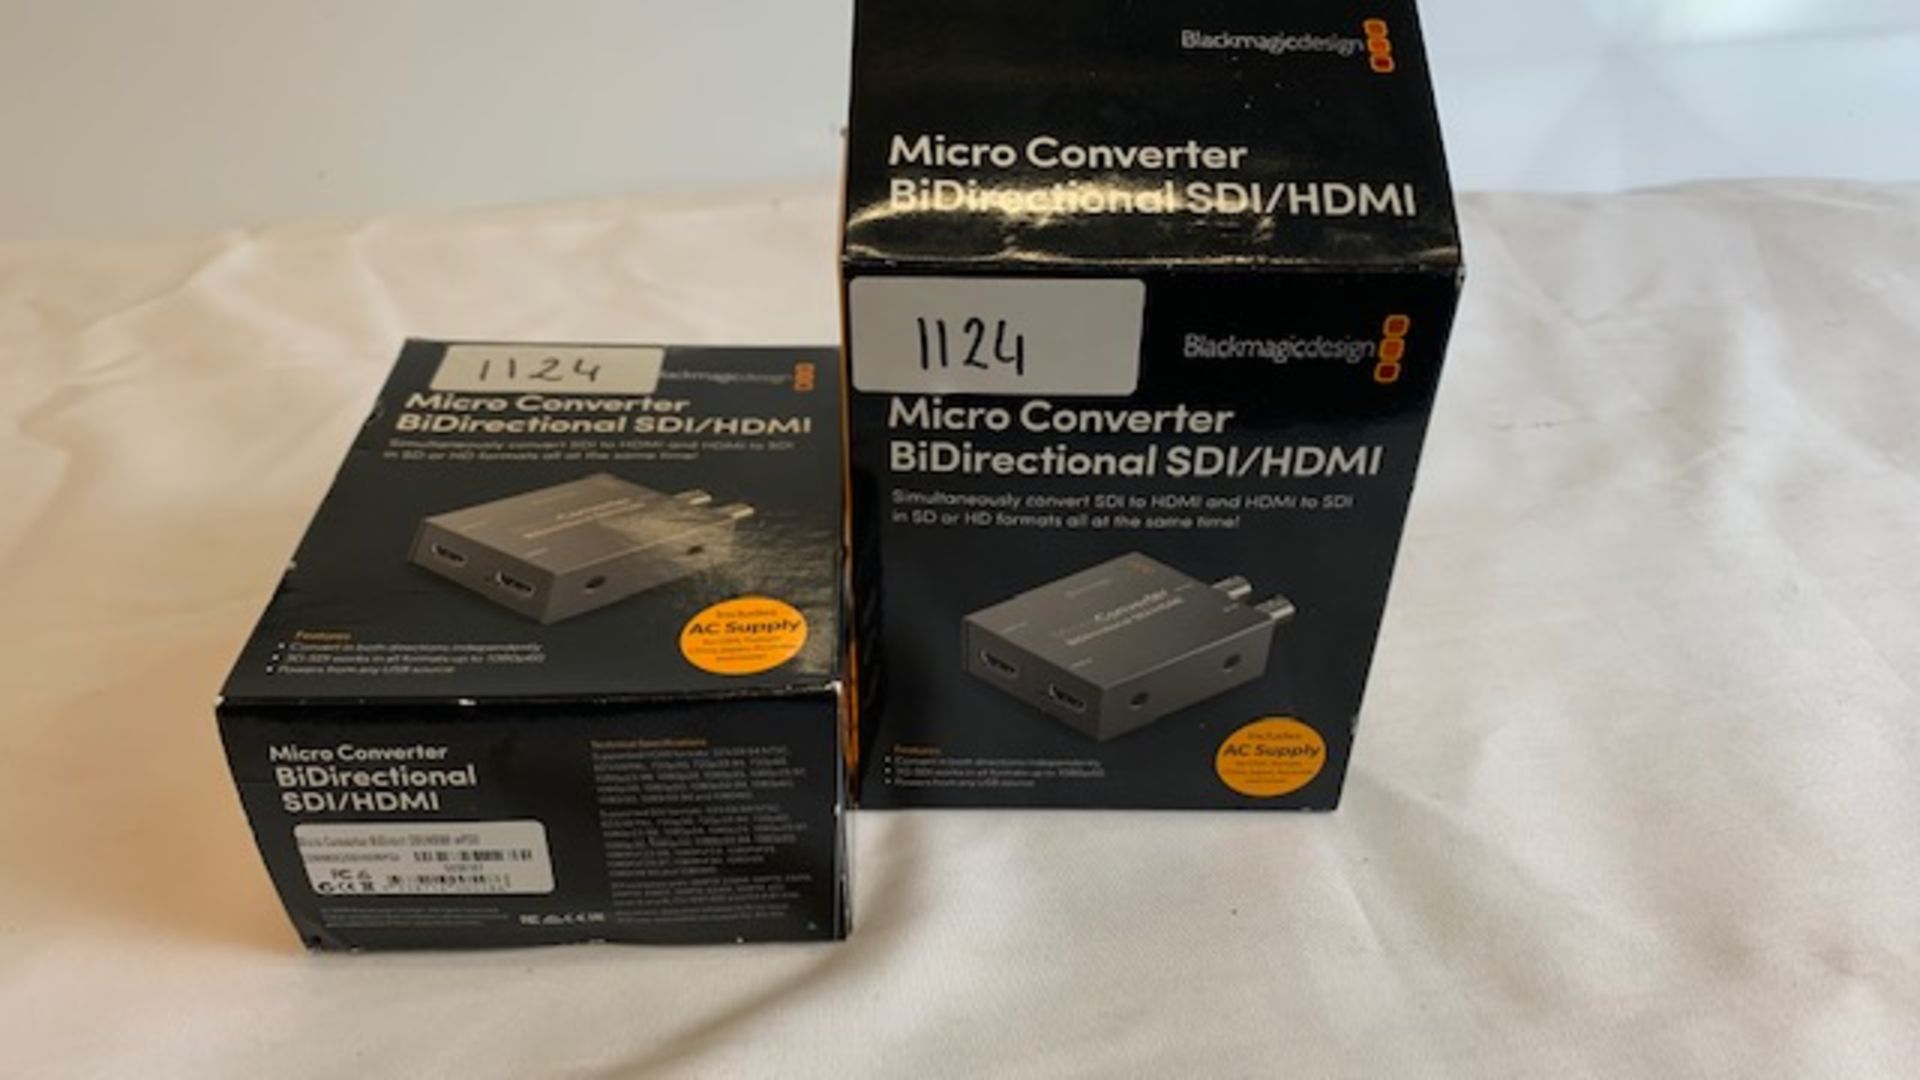 2 x Blackmagic design MicroConverter BiDirectional SDI/HDMI with PSU - Ref: 1124 - CL581 - Location: